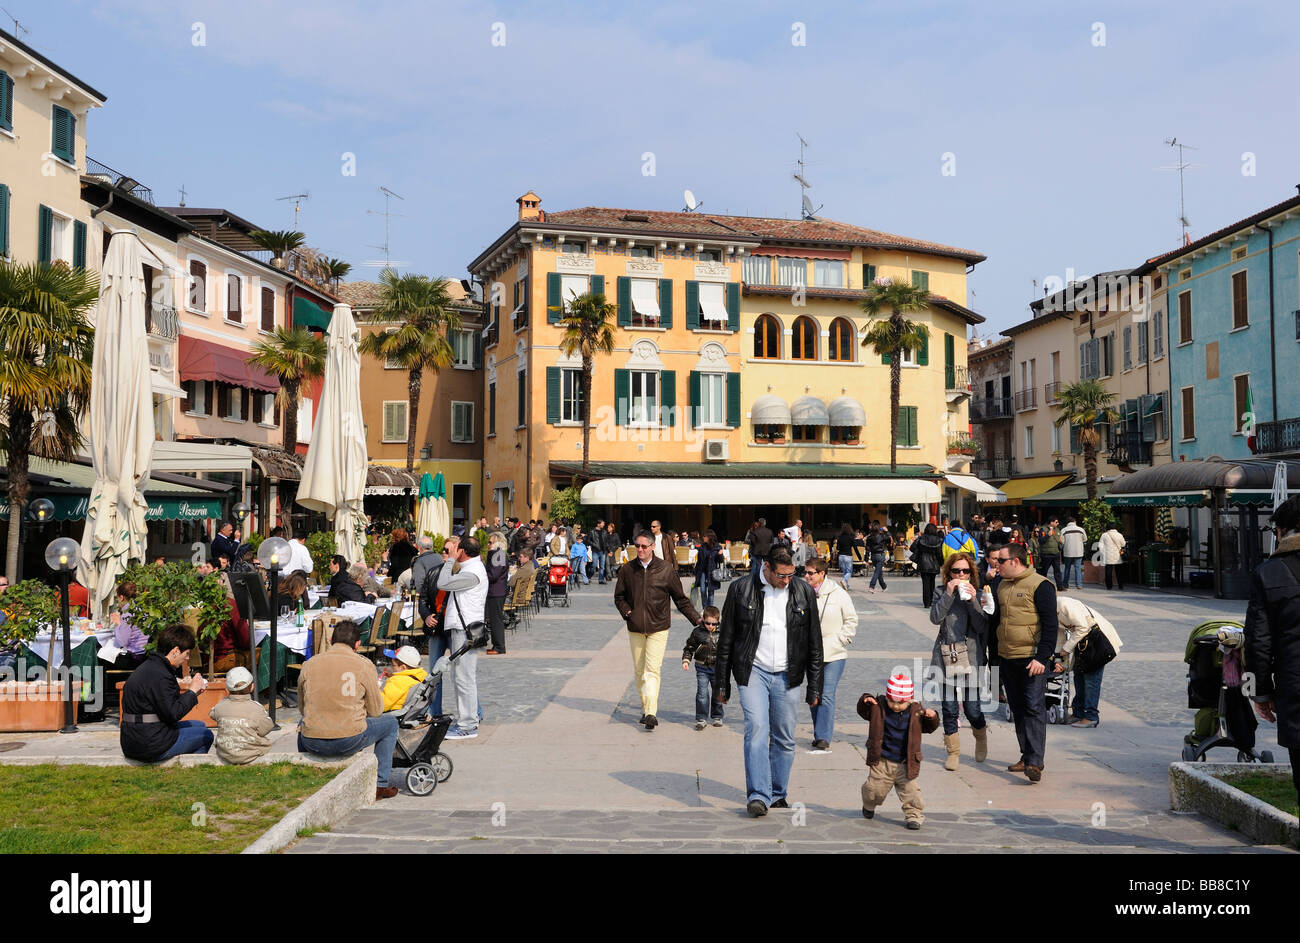 Piazza Carducci square, historic town centre of Sirmione, Lake Garda, Italy, Europe Stock Photo